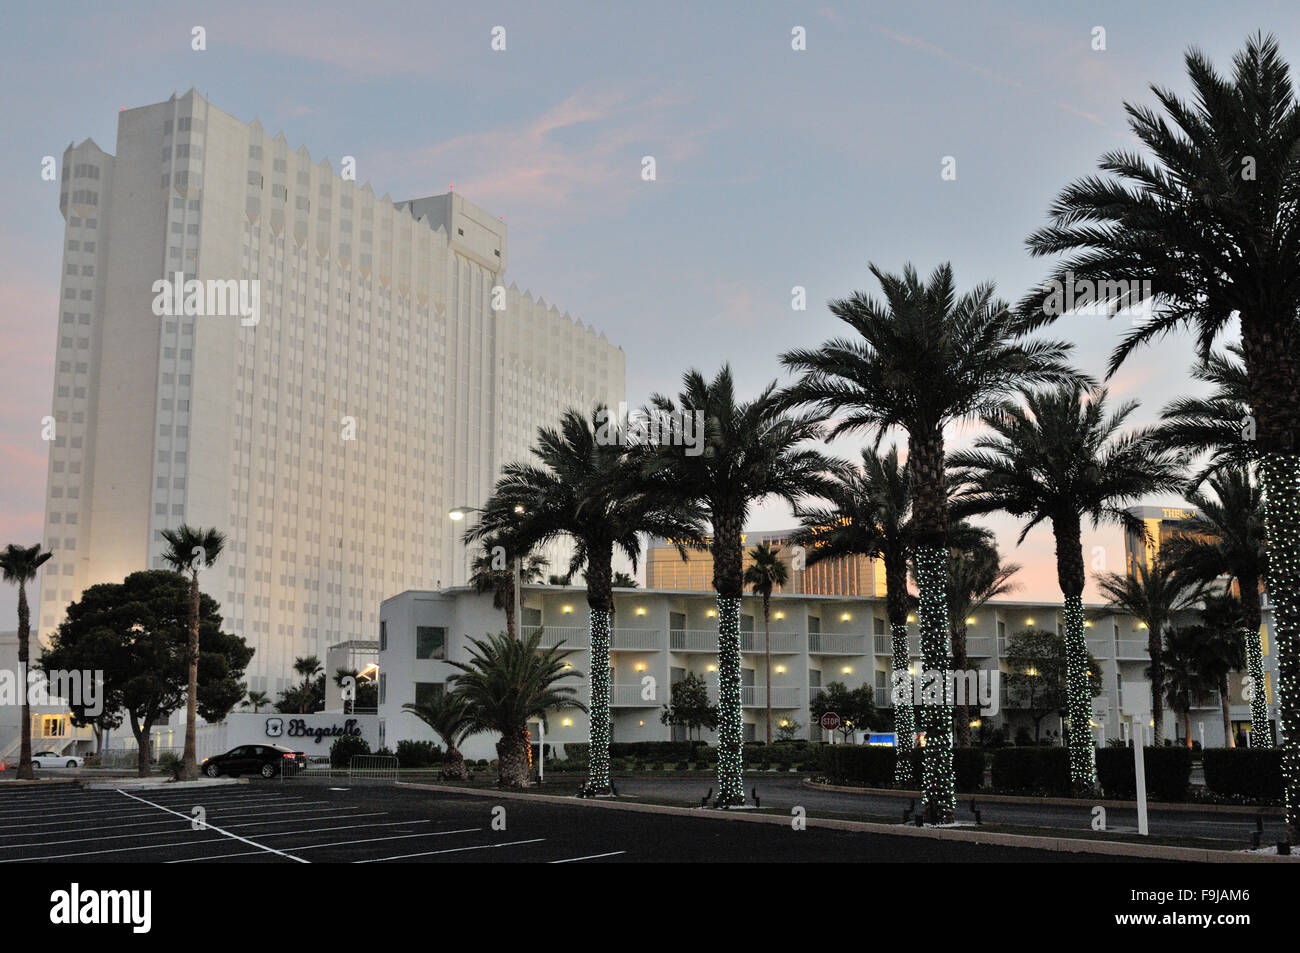 The Tropicana Las Vegas Hotel At Sunset. Stock Photo